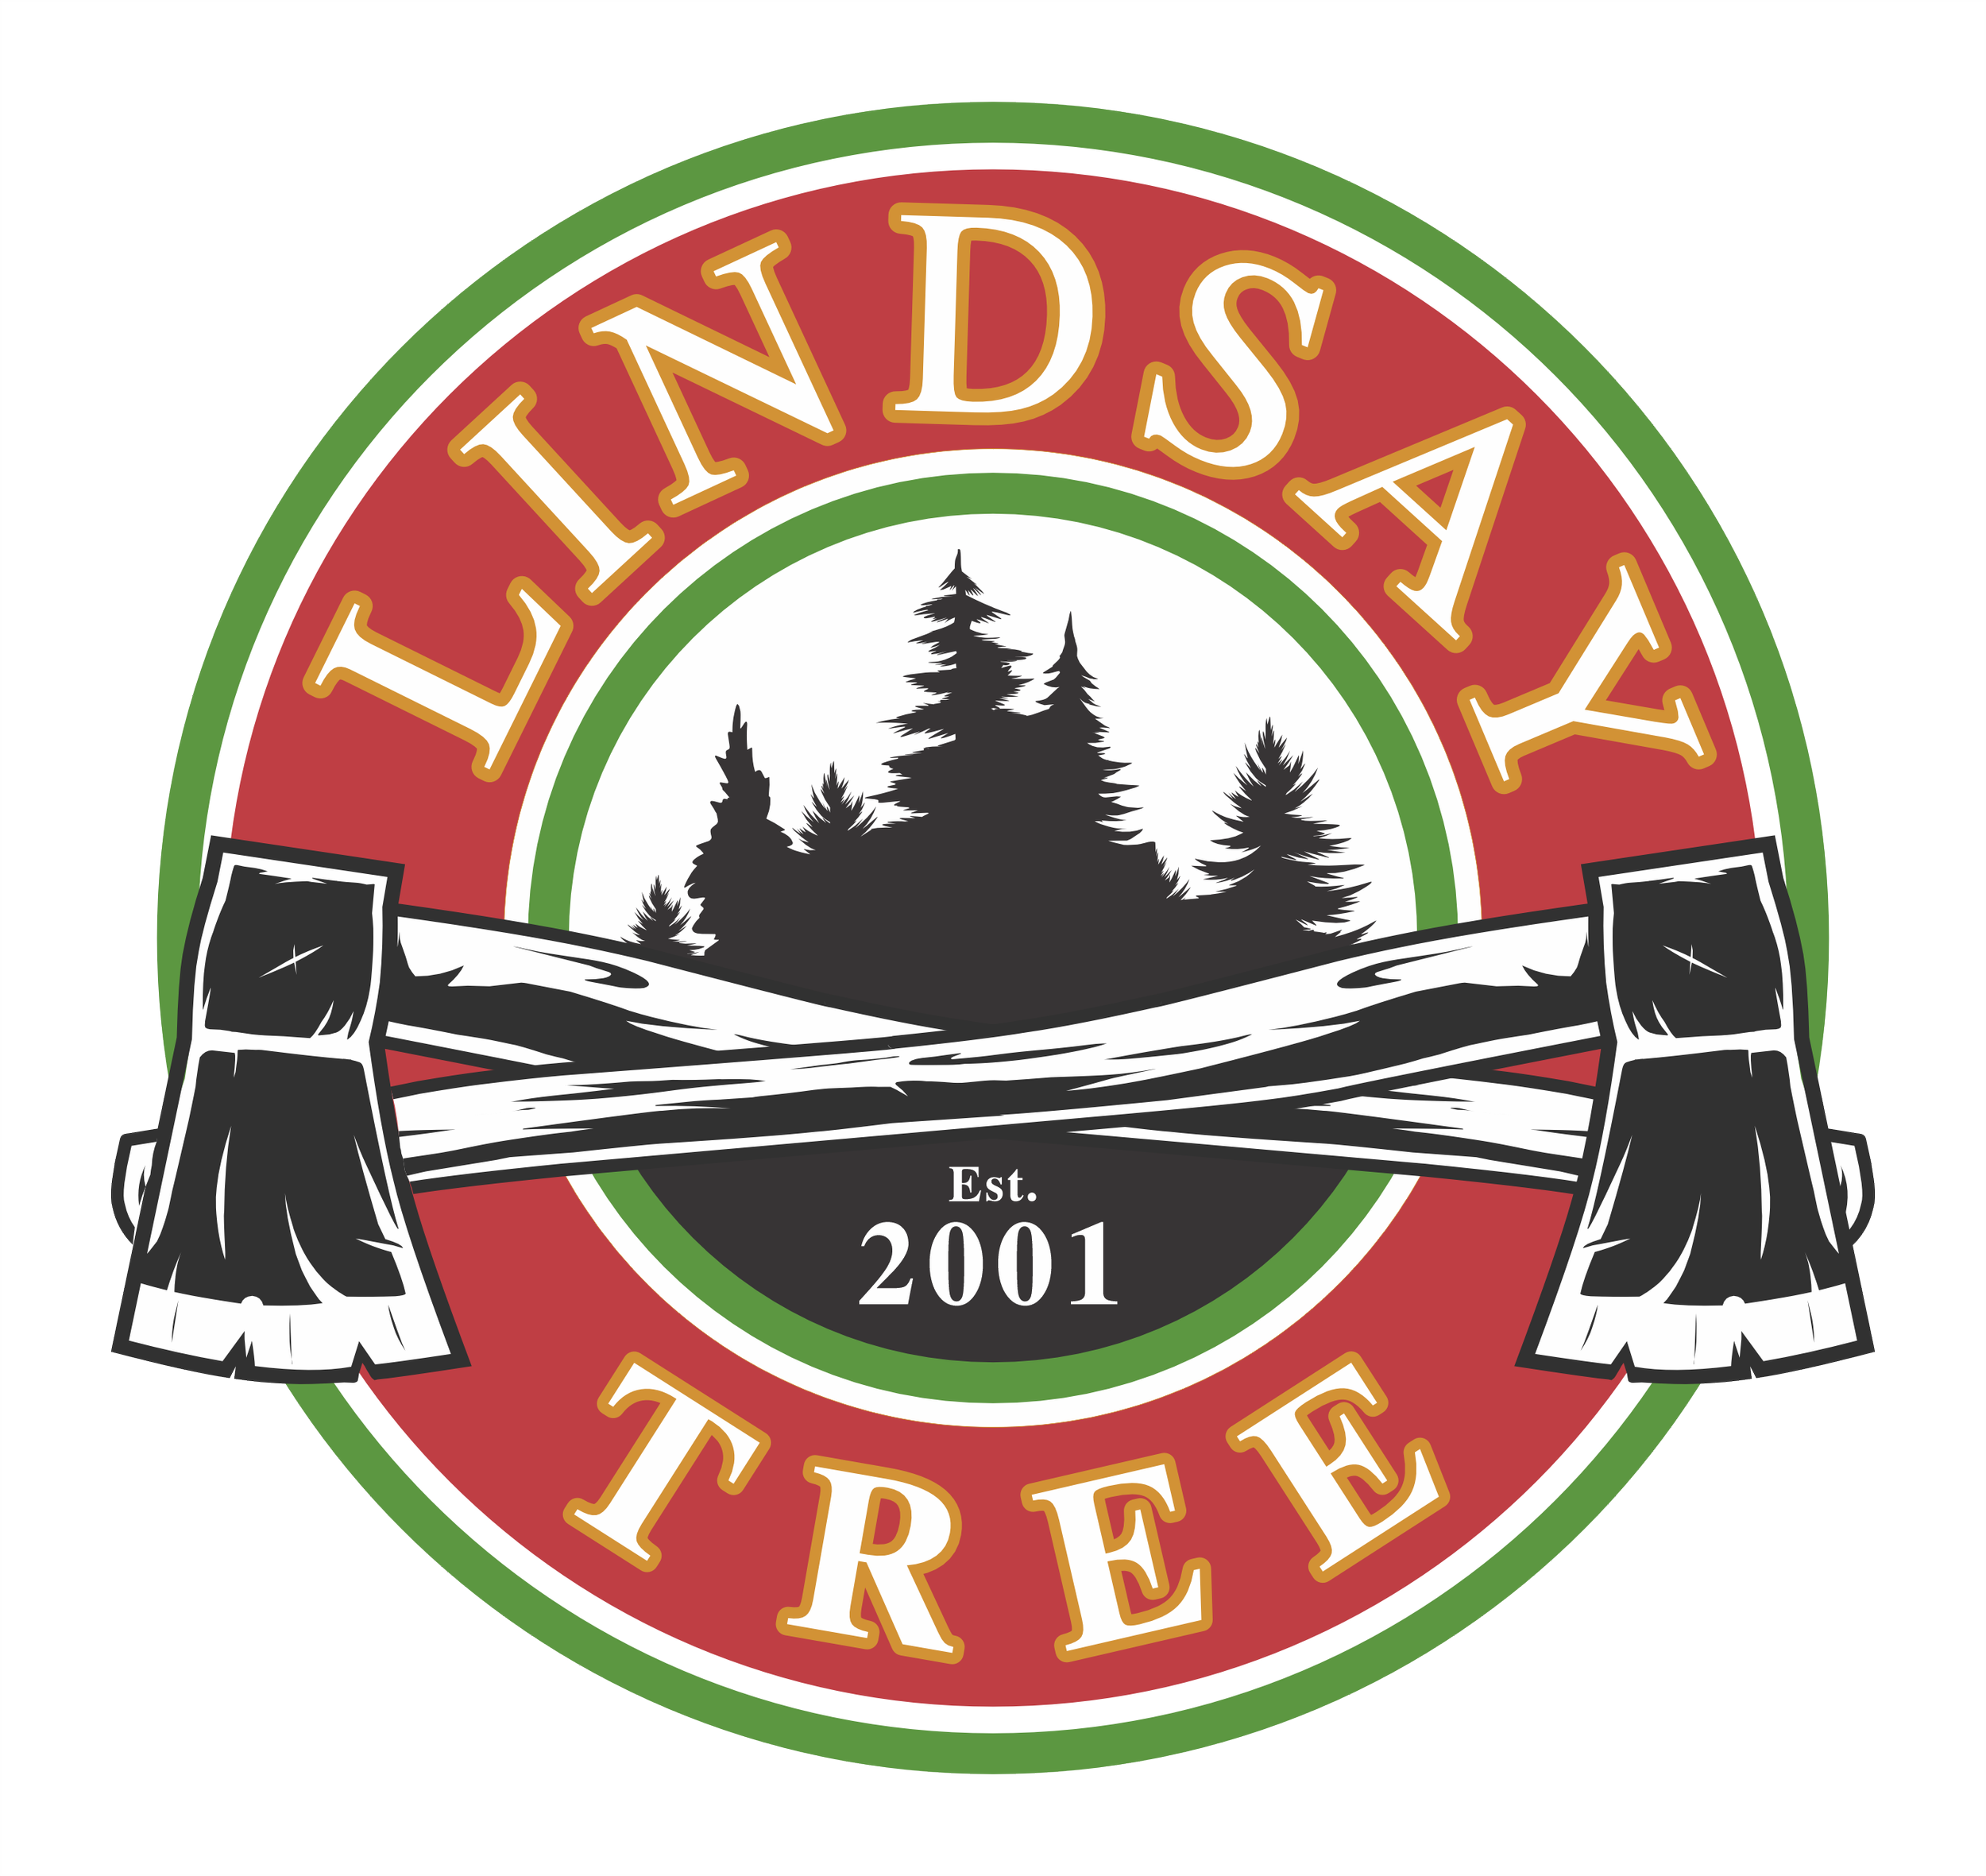 Lindsay Tree Removal